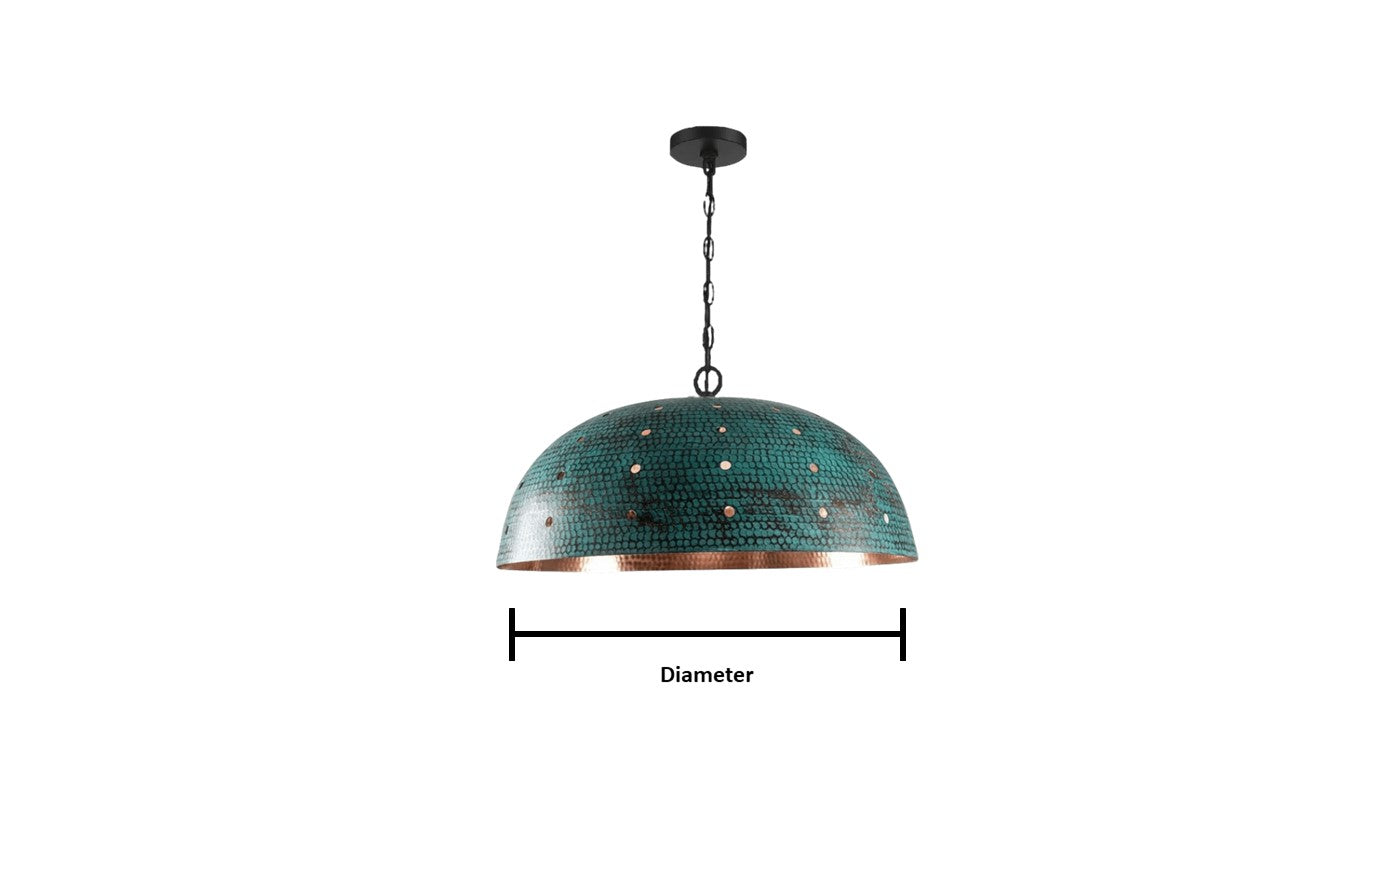 Oxidized Dome Pendant Light Brass Lampshade Ceiling Light , Copper Handmade Lighting Kitchen Island light ,Copper Lampshade Art deco lamp - Afoscraft